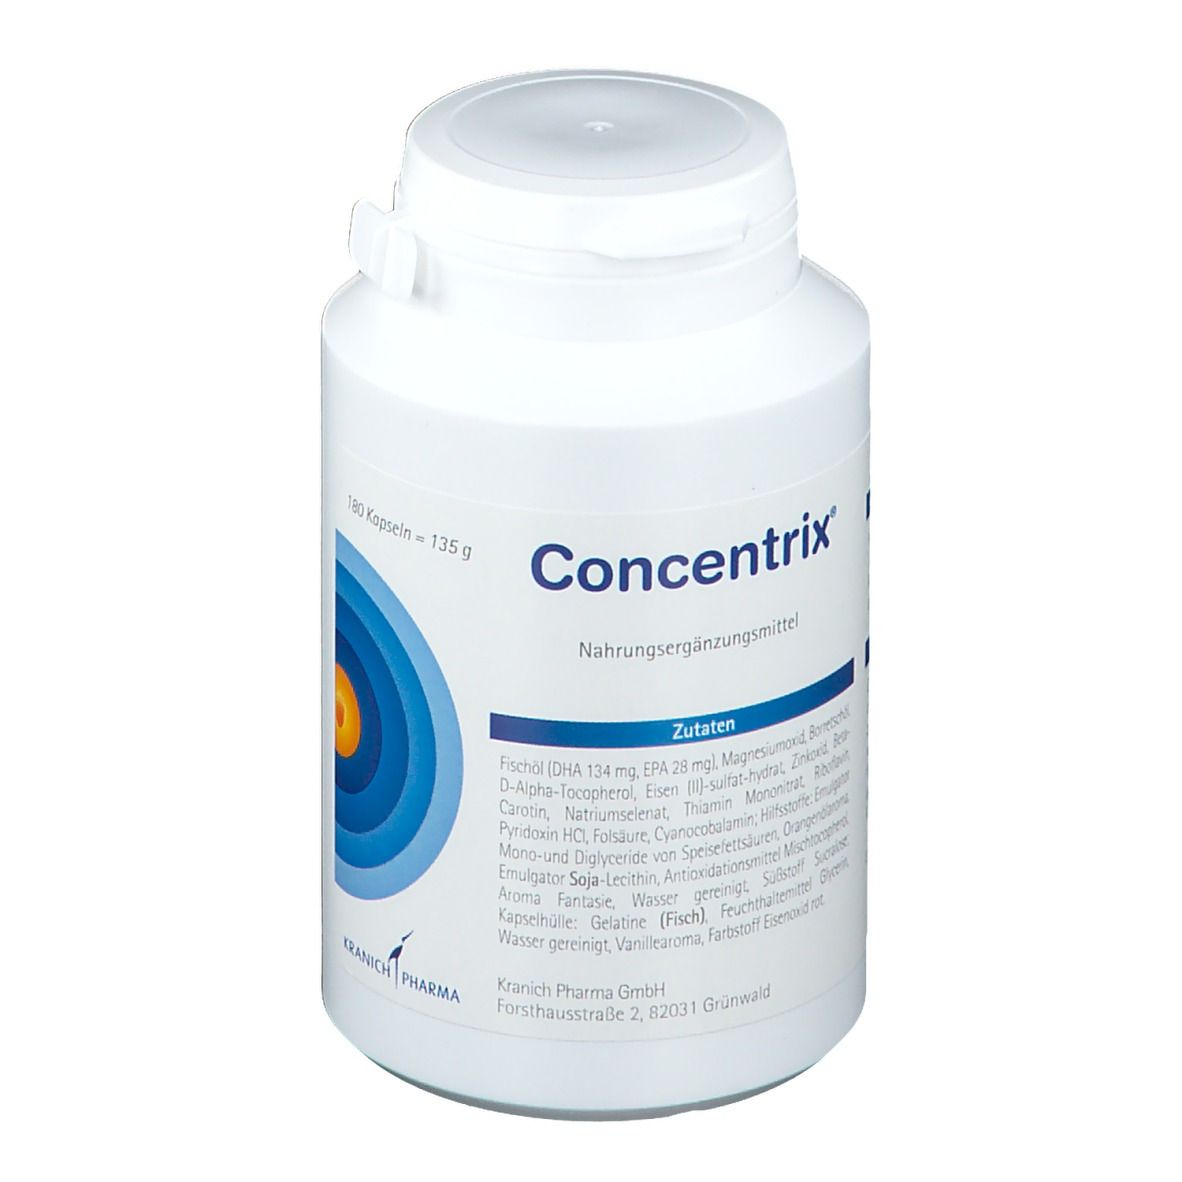 Concentrix®